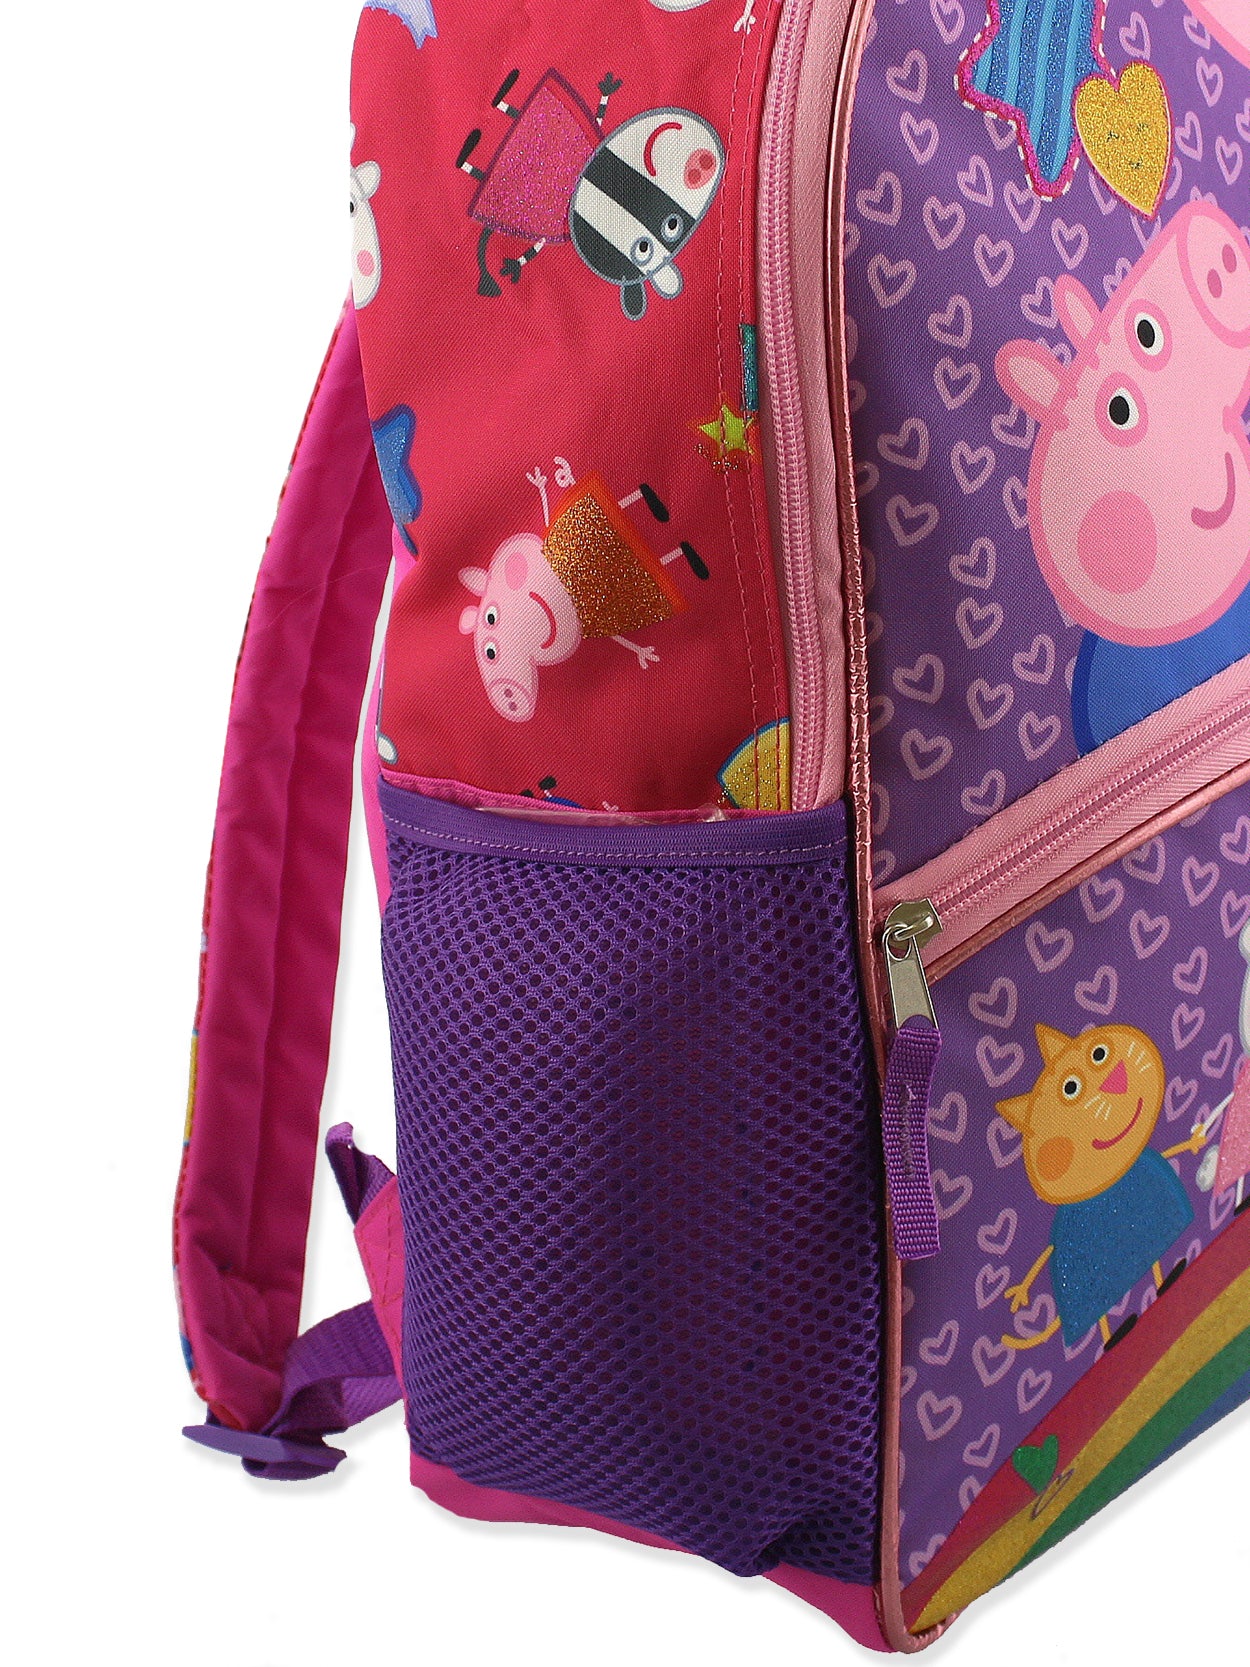 Peppa Pig Nick Jr Girls Soft Insulated School Lunch Box